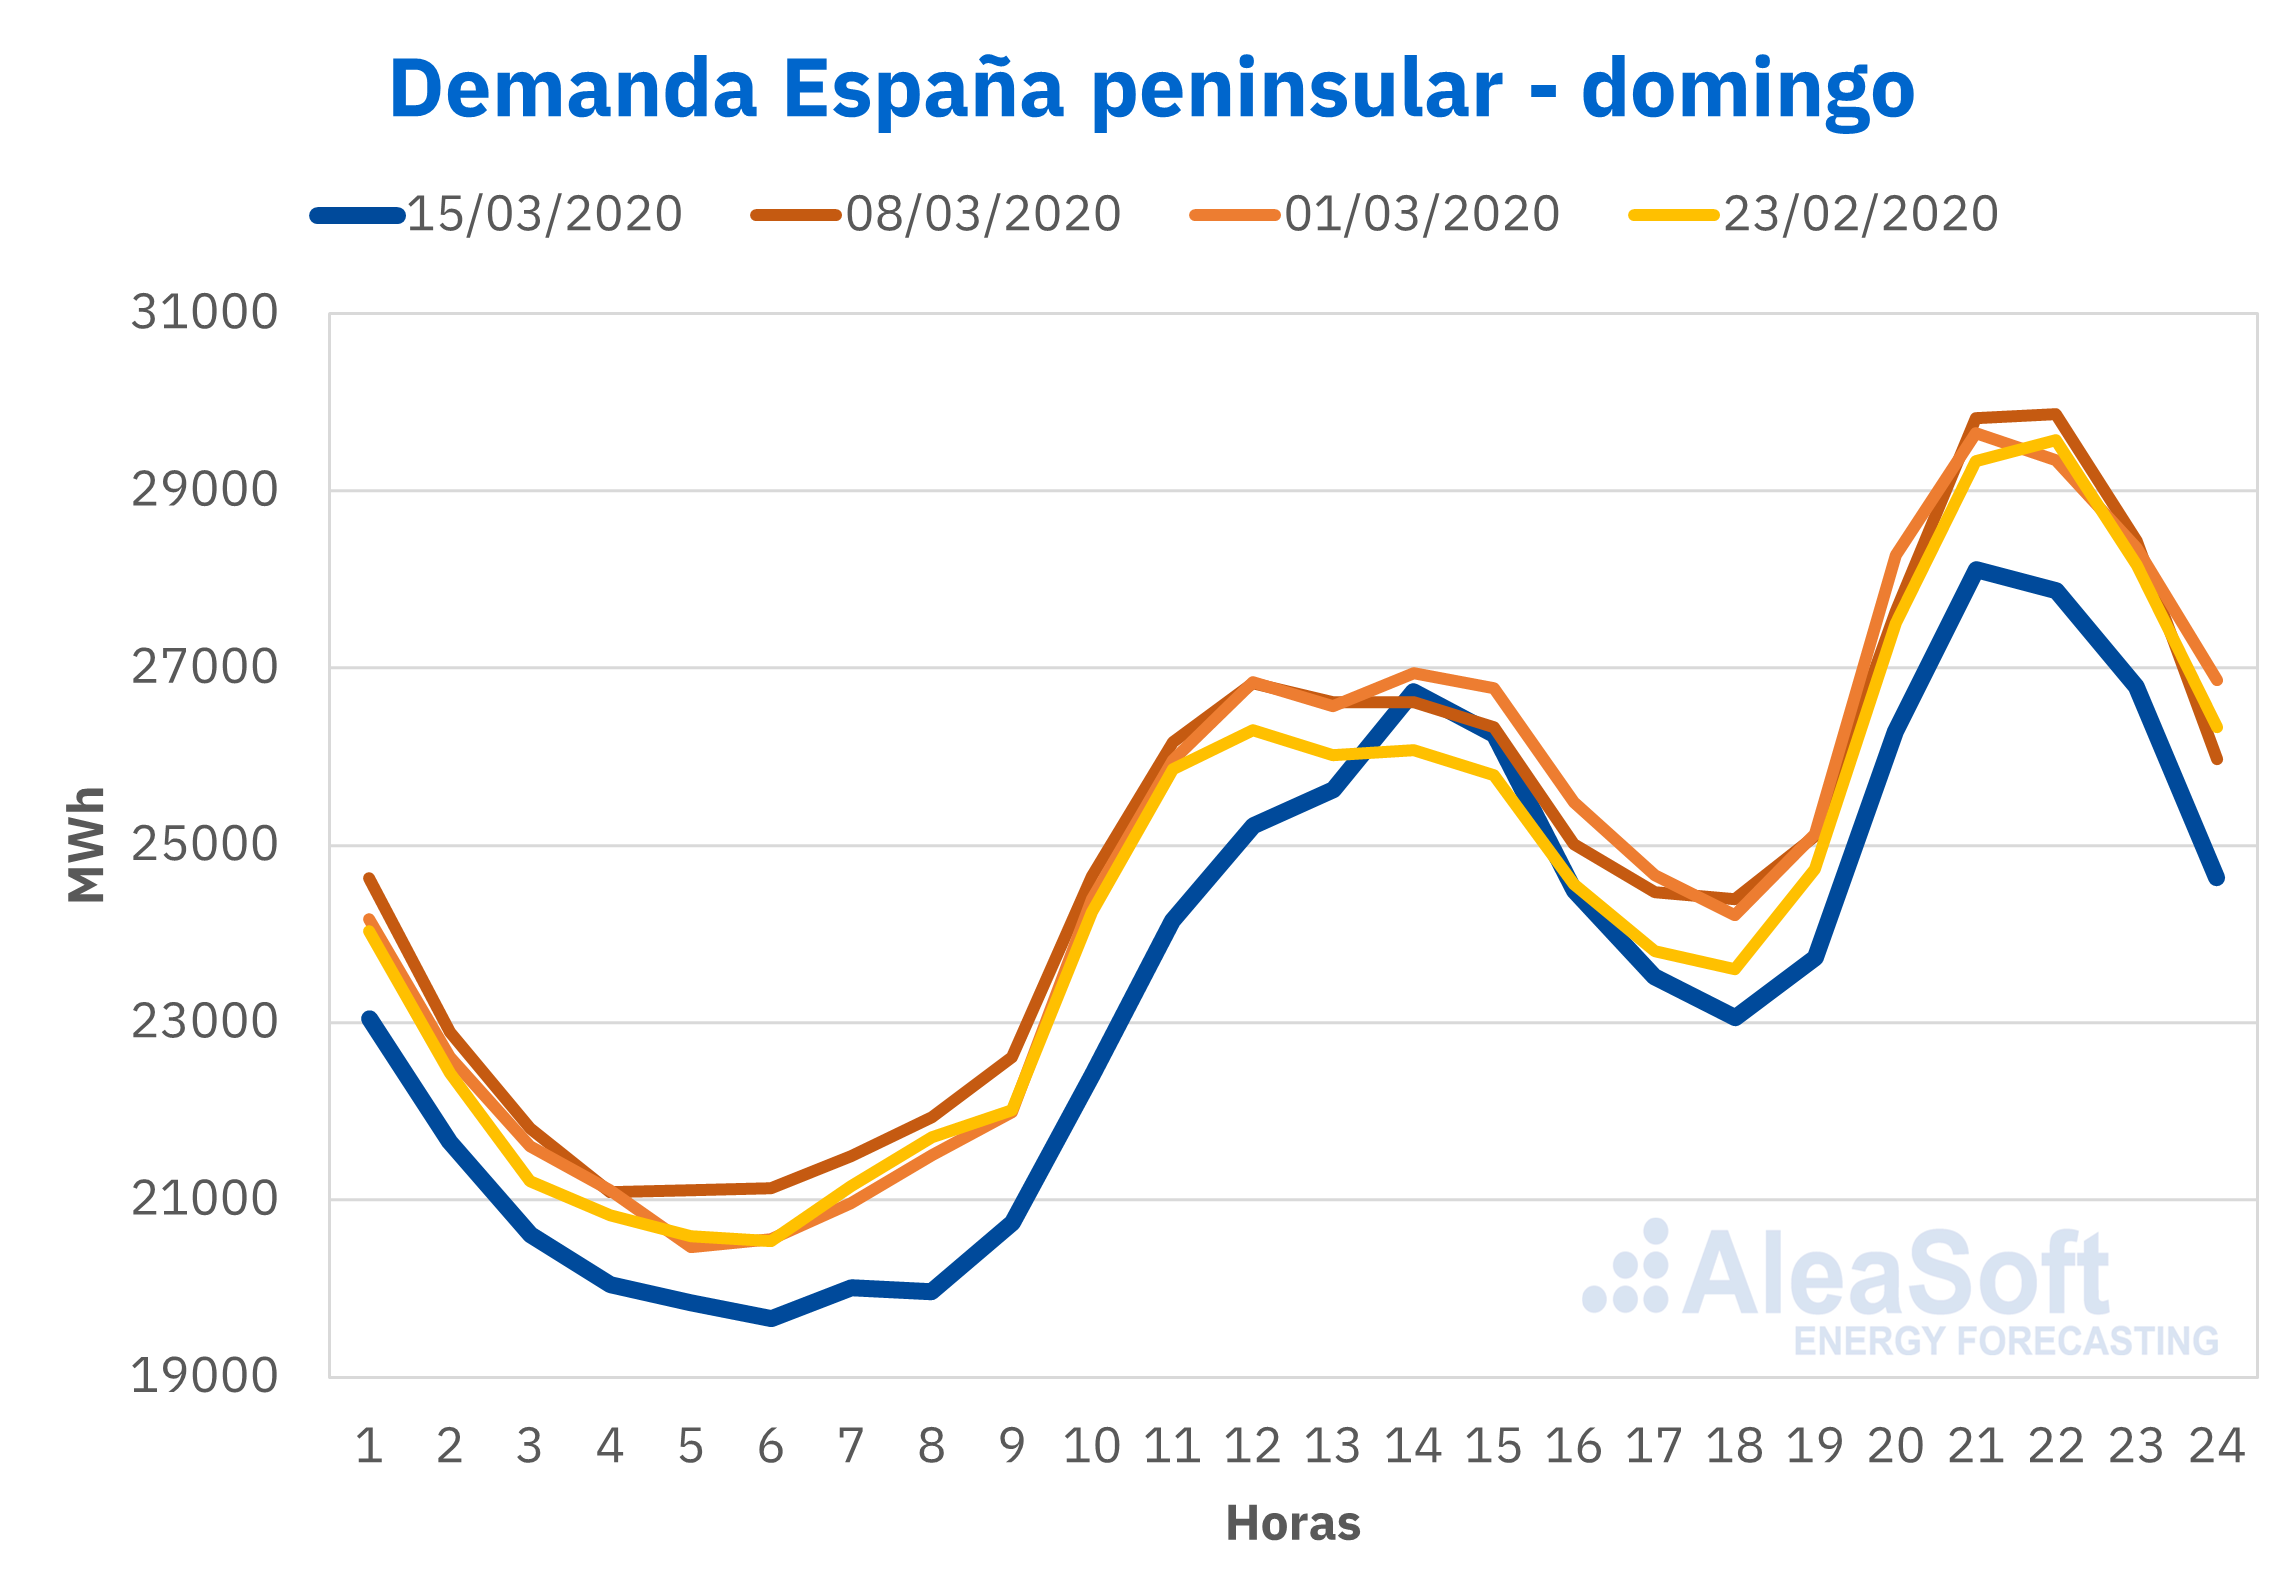 Demanda electricidad Espana peninsular domingos anteriores coronavirus